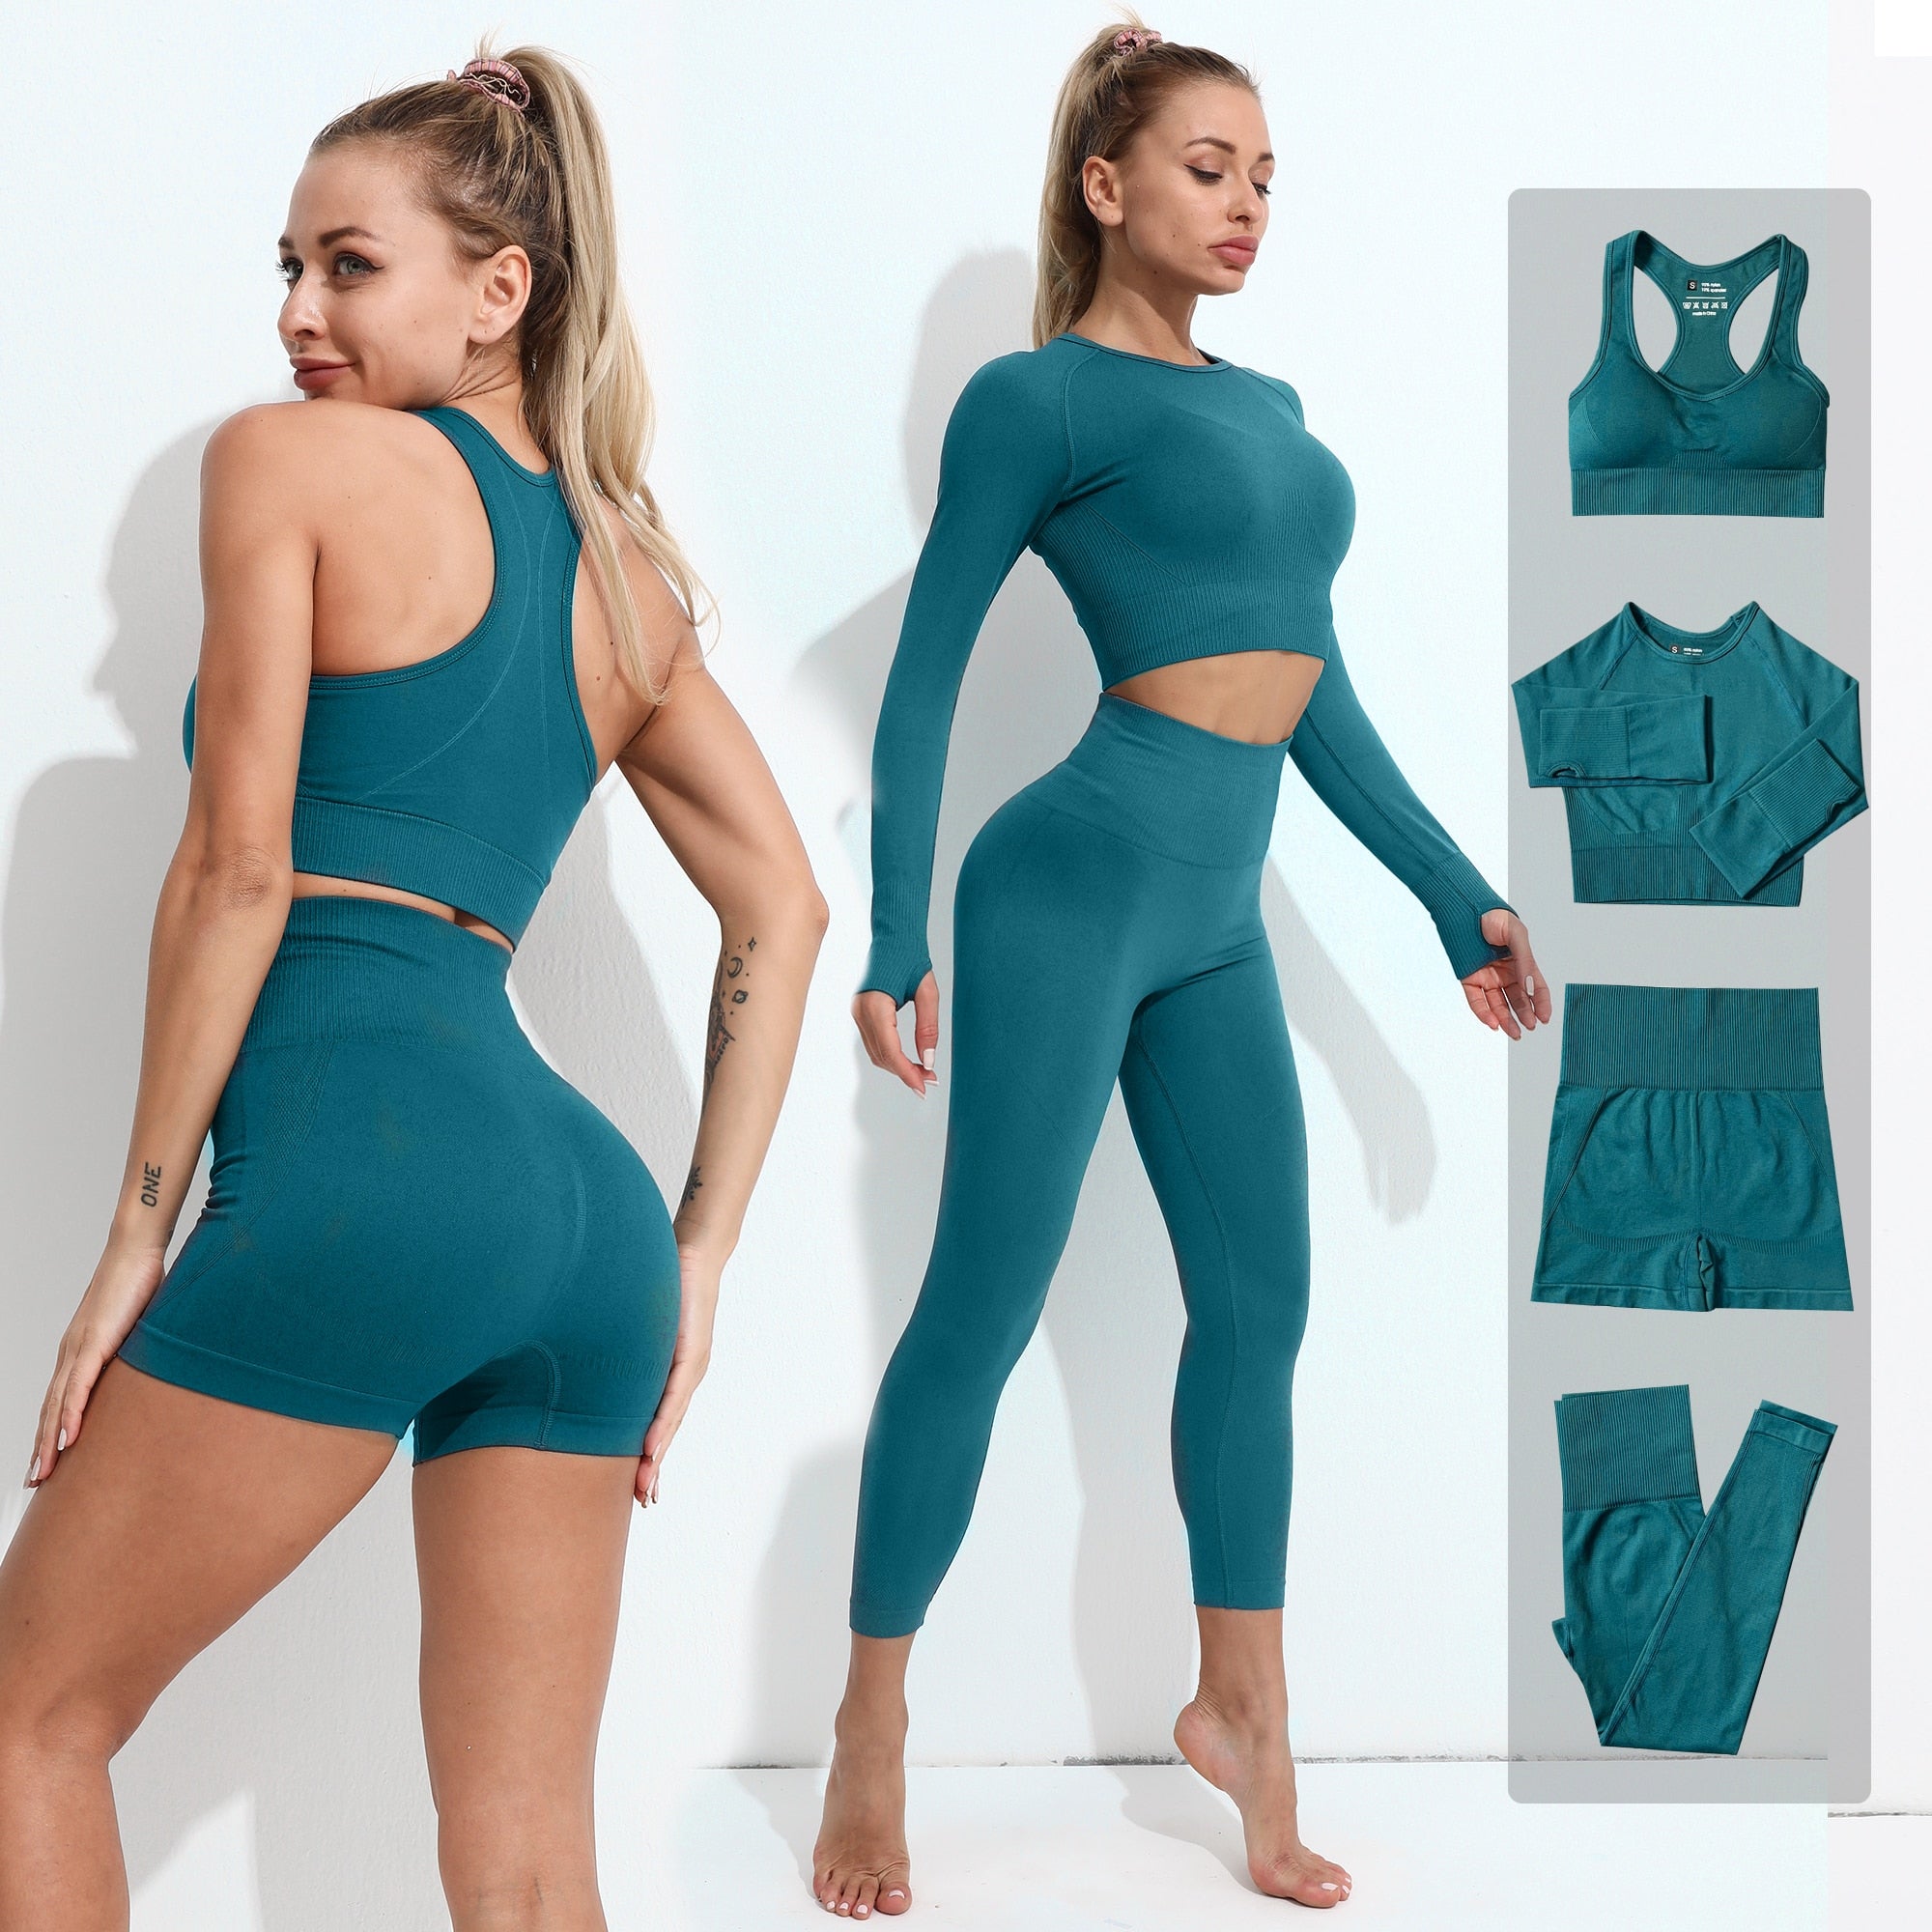 buzos deportivos para damas - Buscar con Google  Womens workout outfits,  Stylish activewear, Workout attire